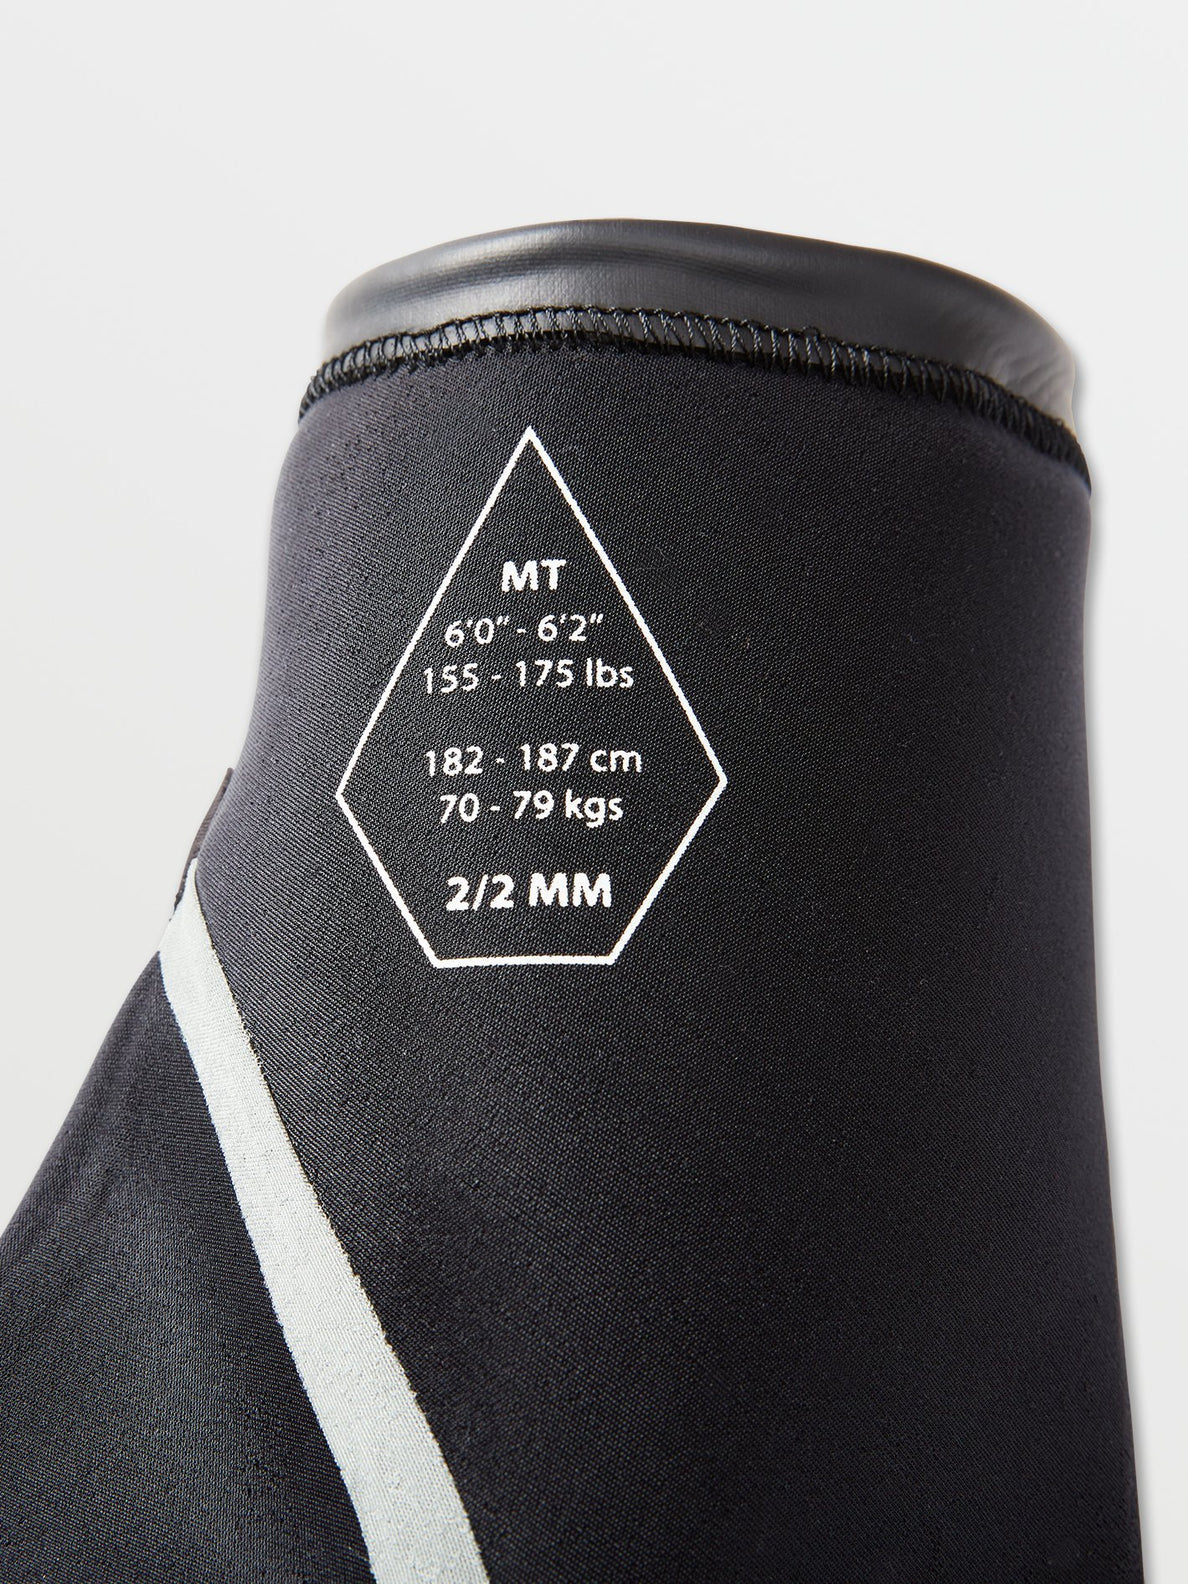 Modulator 2/2 mm Short Sleeve Chest Zip Spring Wetsuit - Black